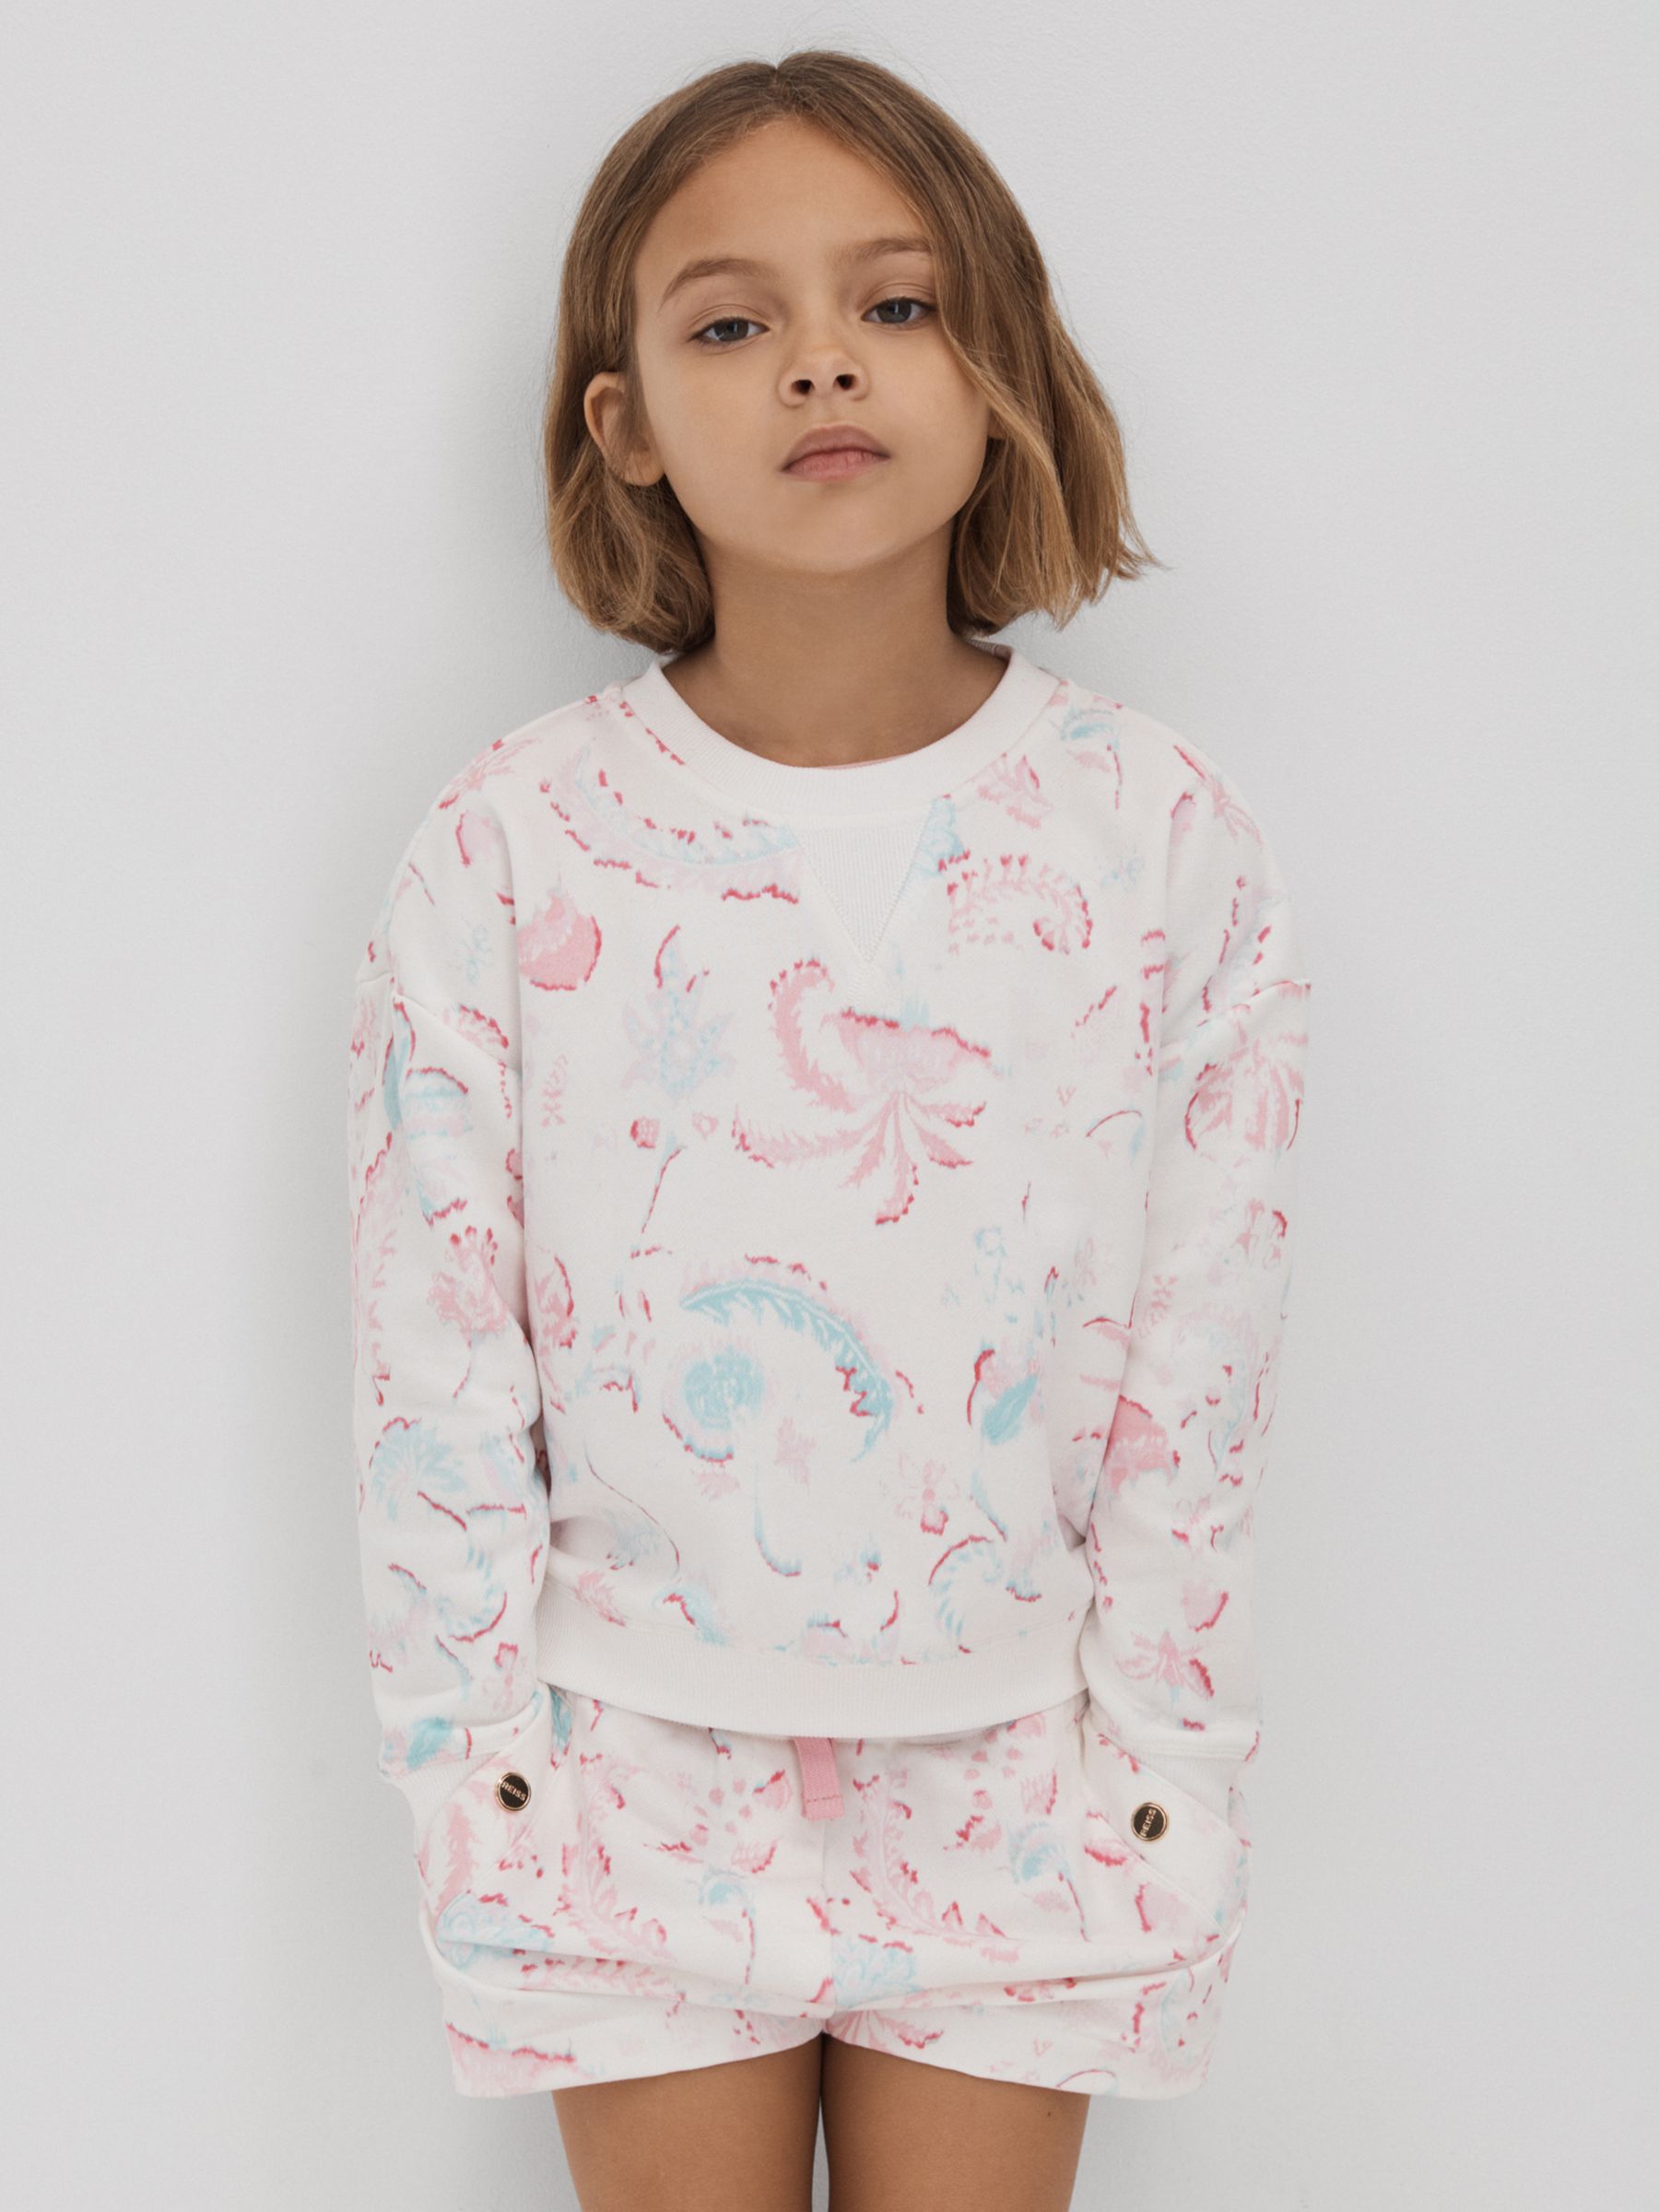 Buy Reiss Kids' Jessie Floral Print Sweatshirt & Shorts Set, Pink/Multi Online at johnlewis.com